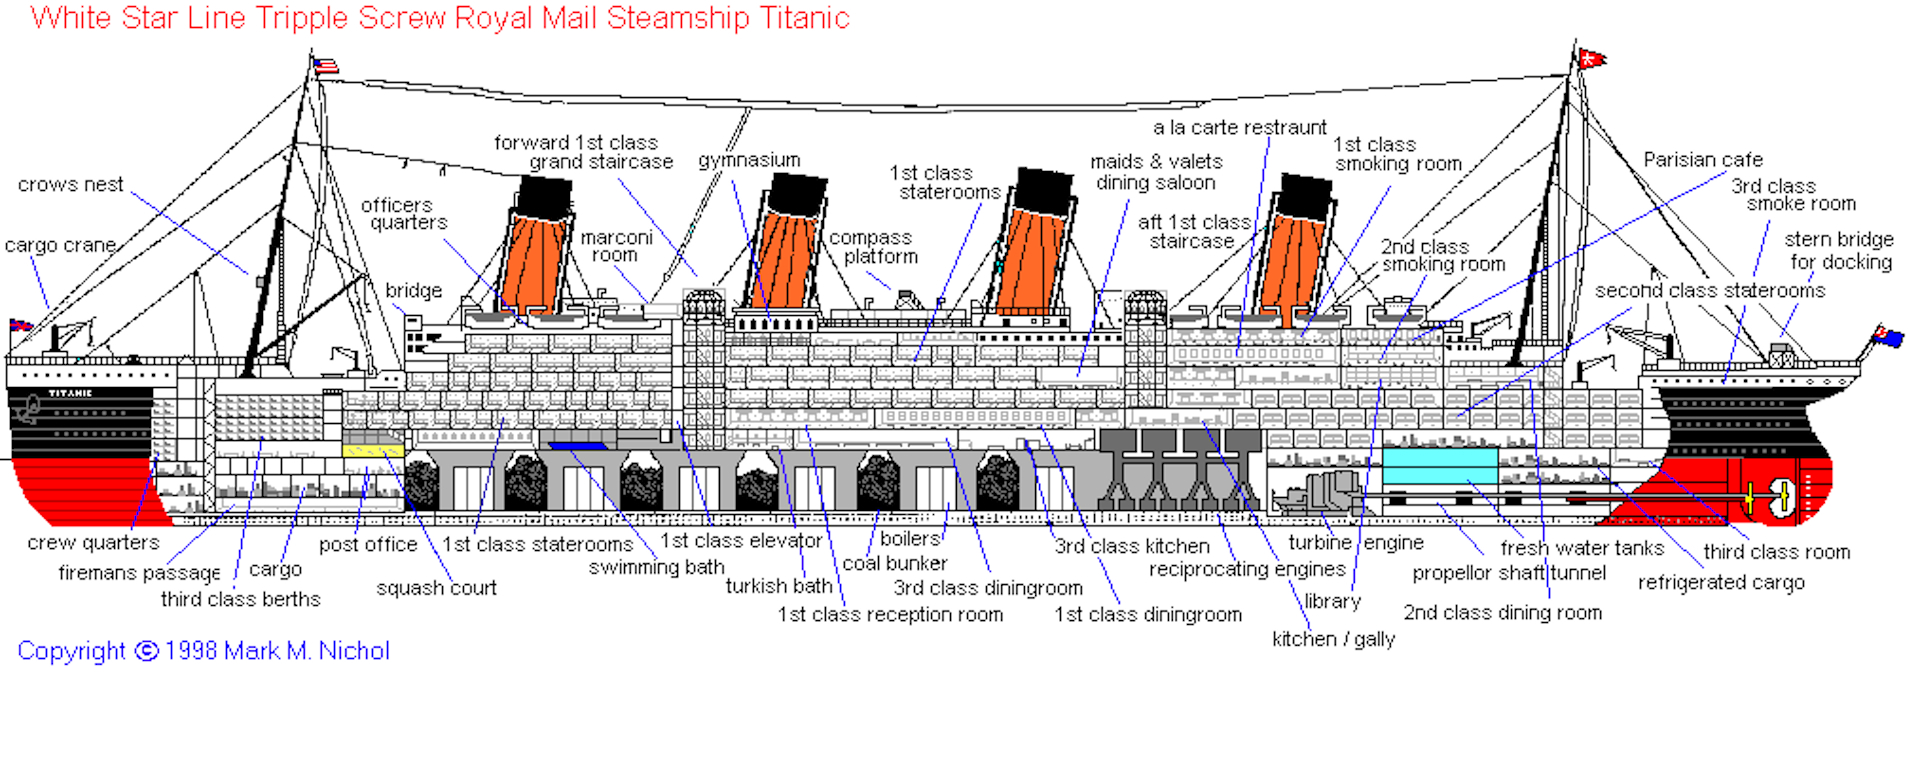 Titanic_wildsoundmovies.com.jpg